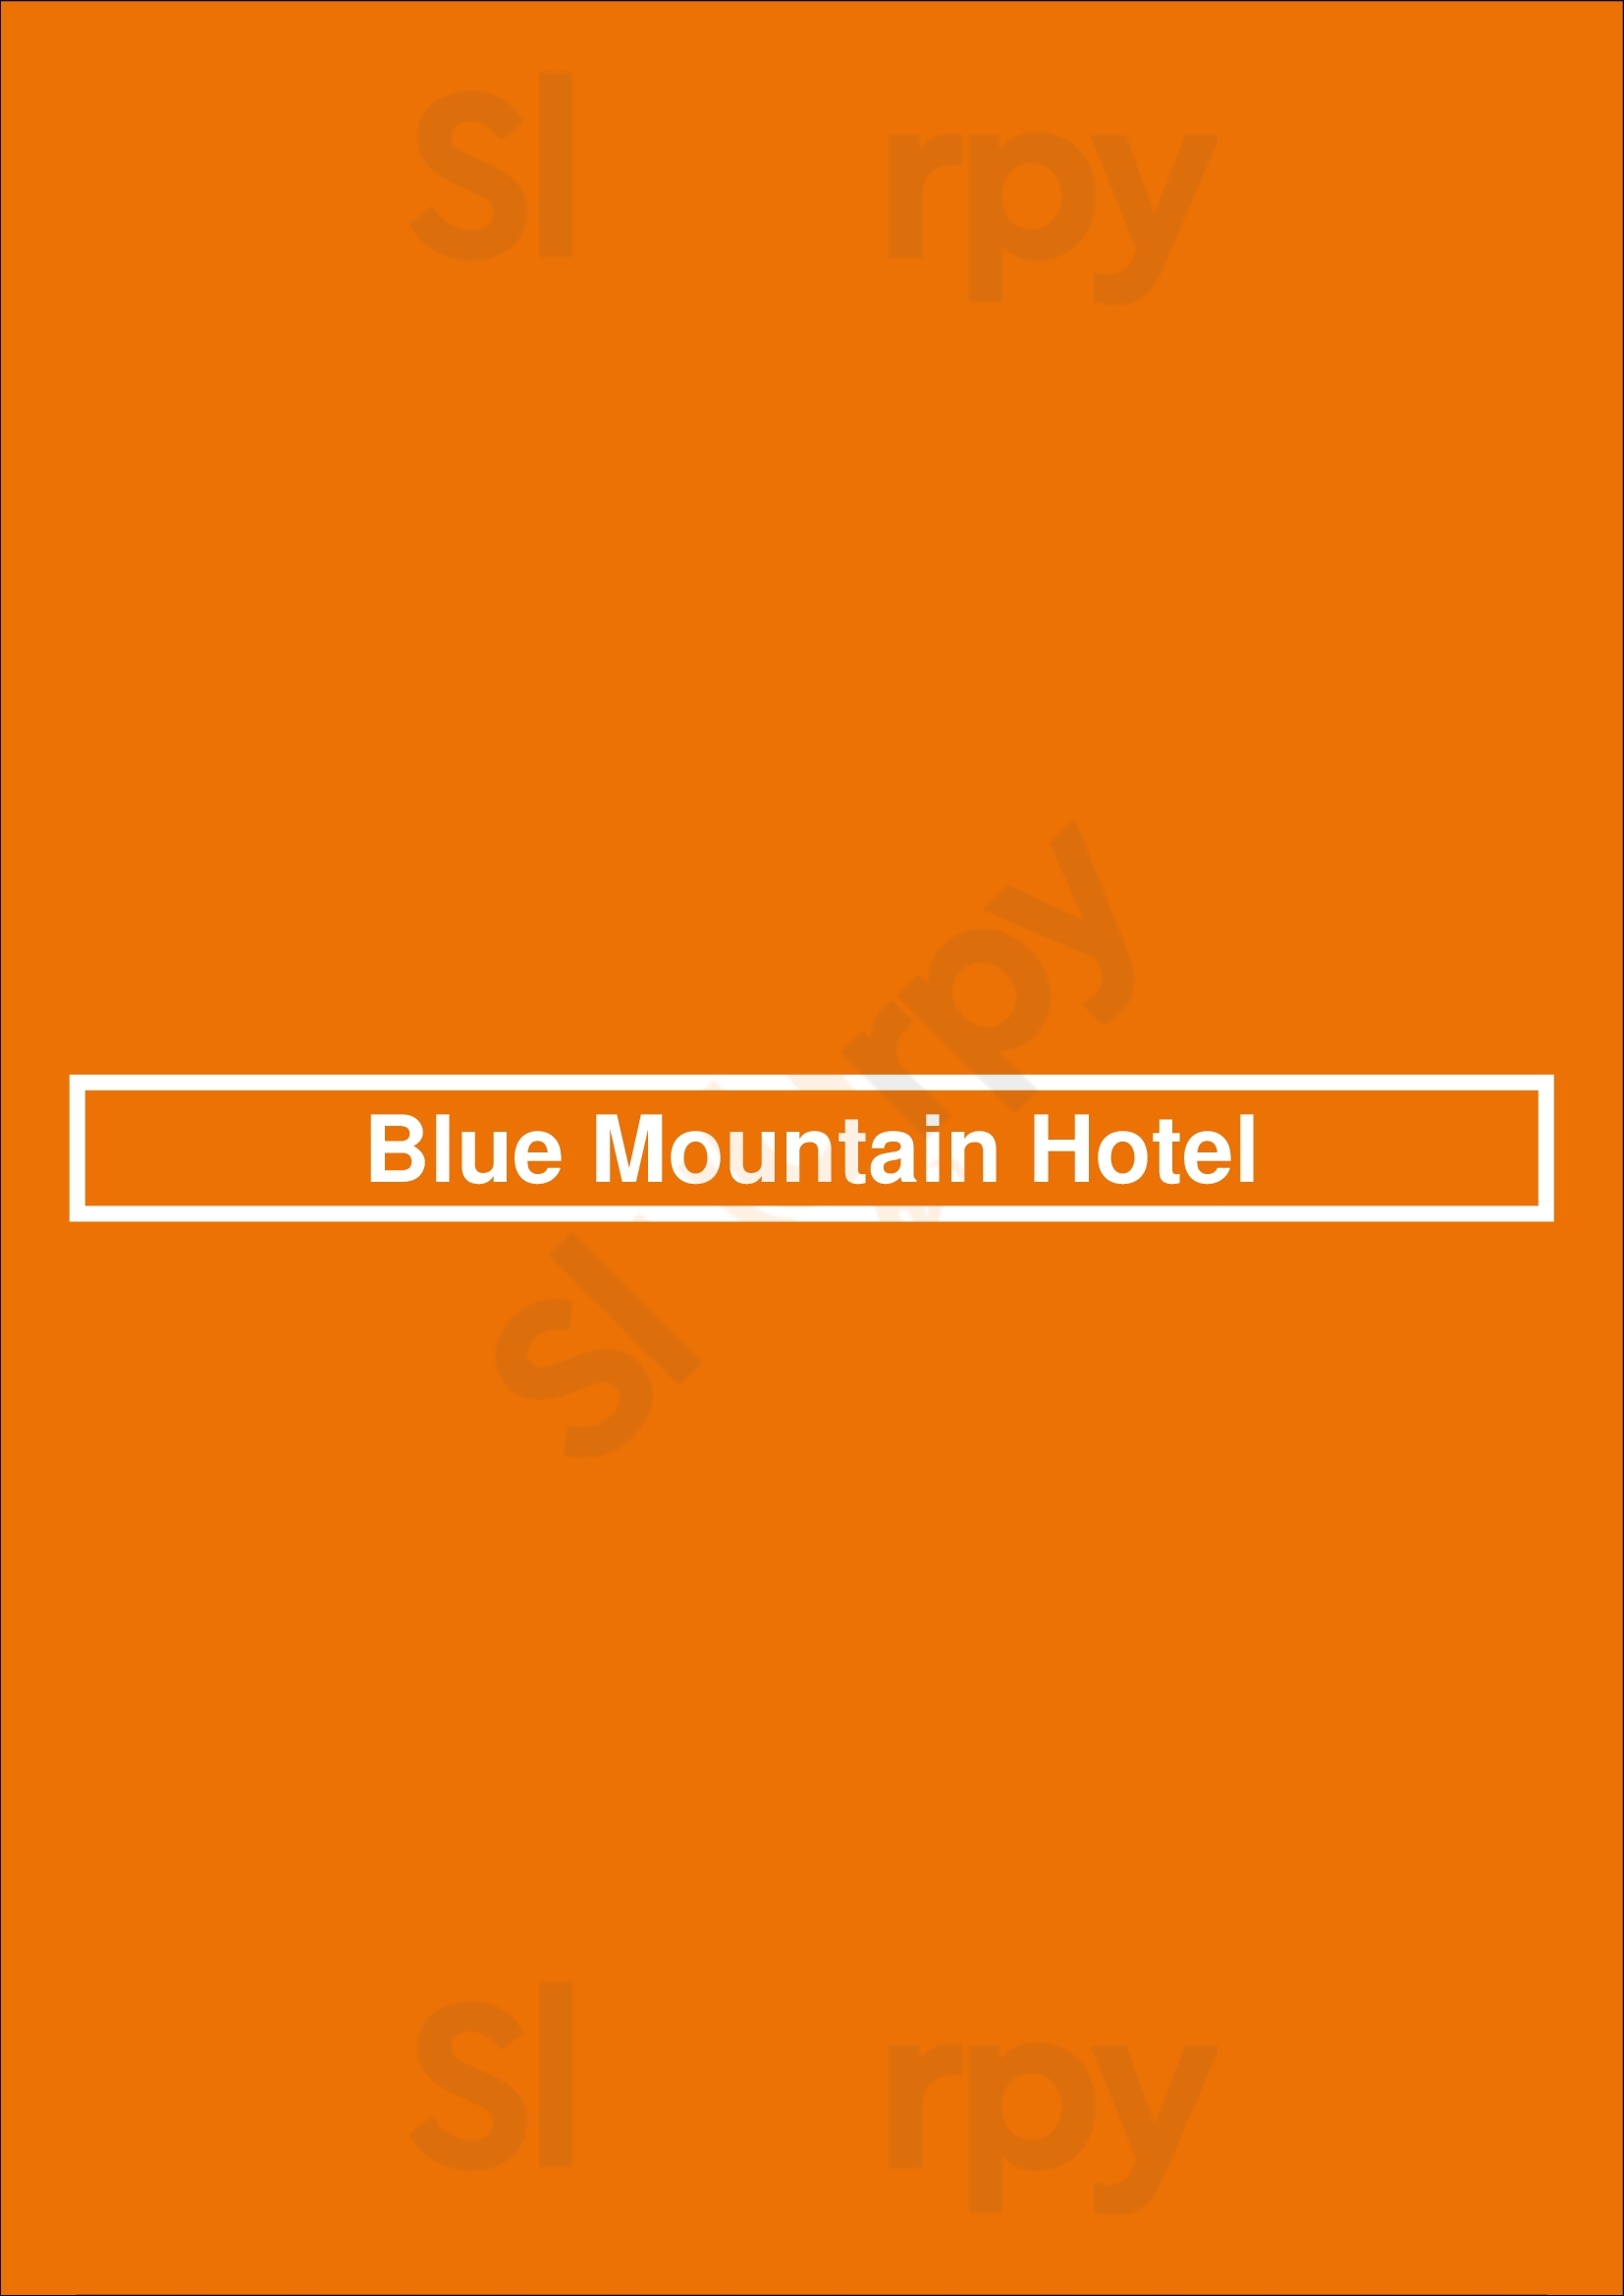 Blue Mountain Hotel Toowoomba Menu - 1